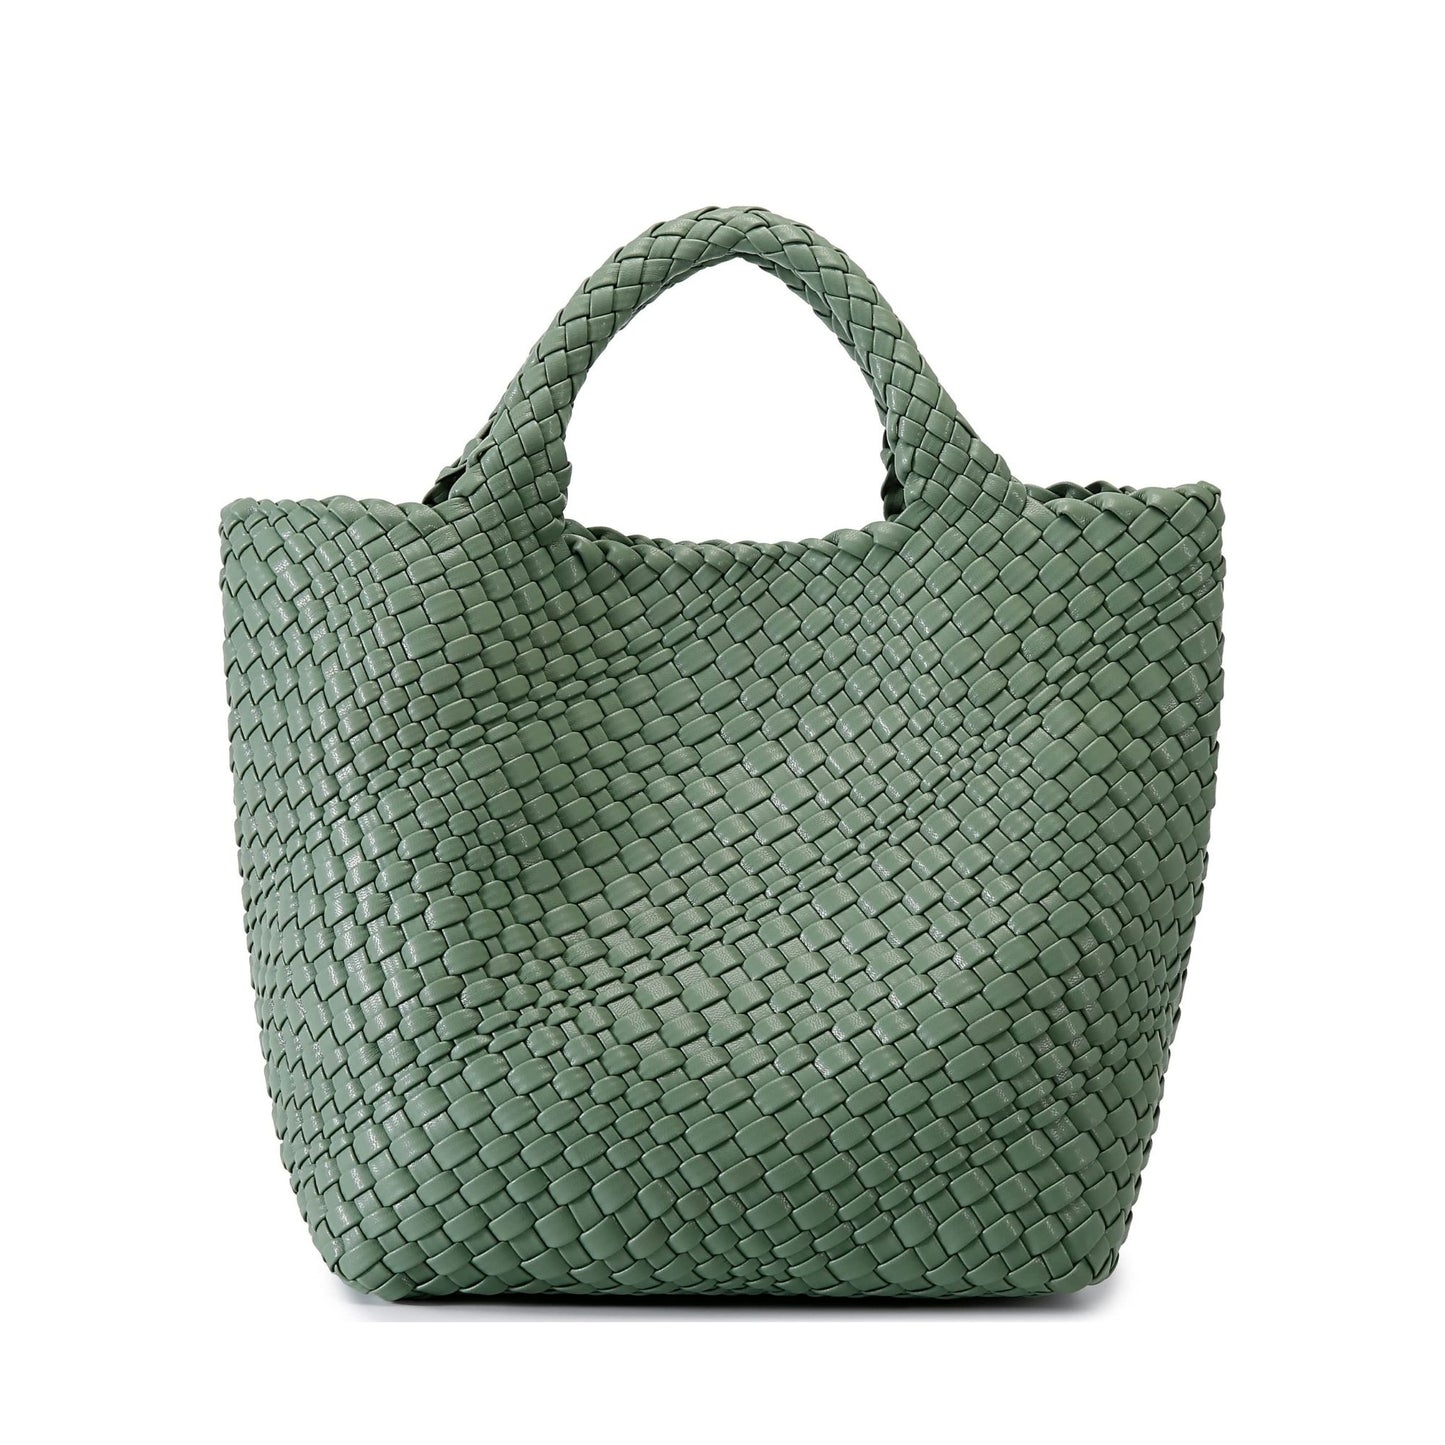 LAORENTOU Vegan Leather Small Tote Handbag for Women Checkered Purses Satchel Shoulder Bags Beach Travel Bag